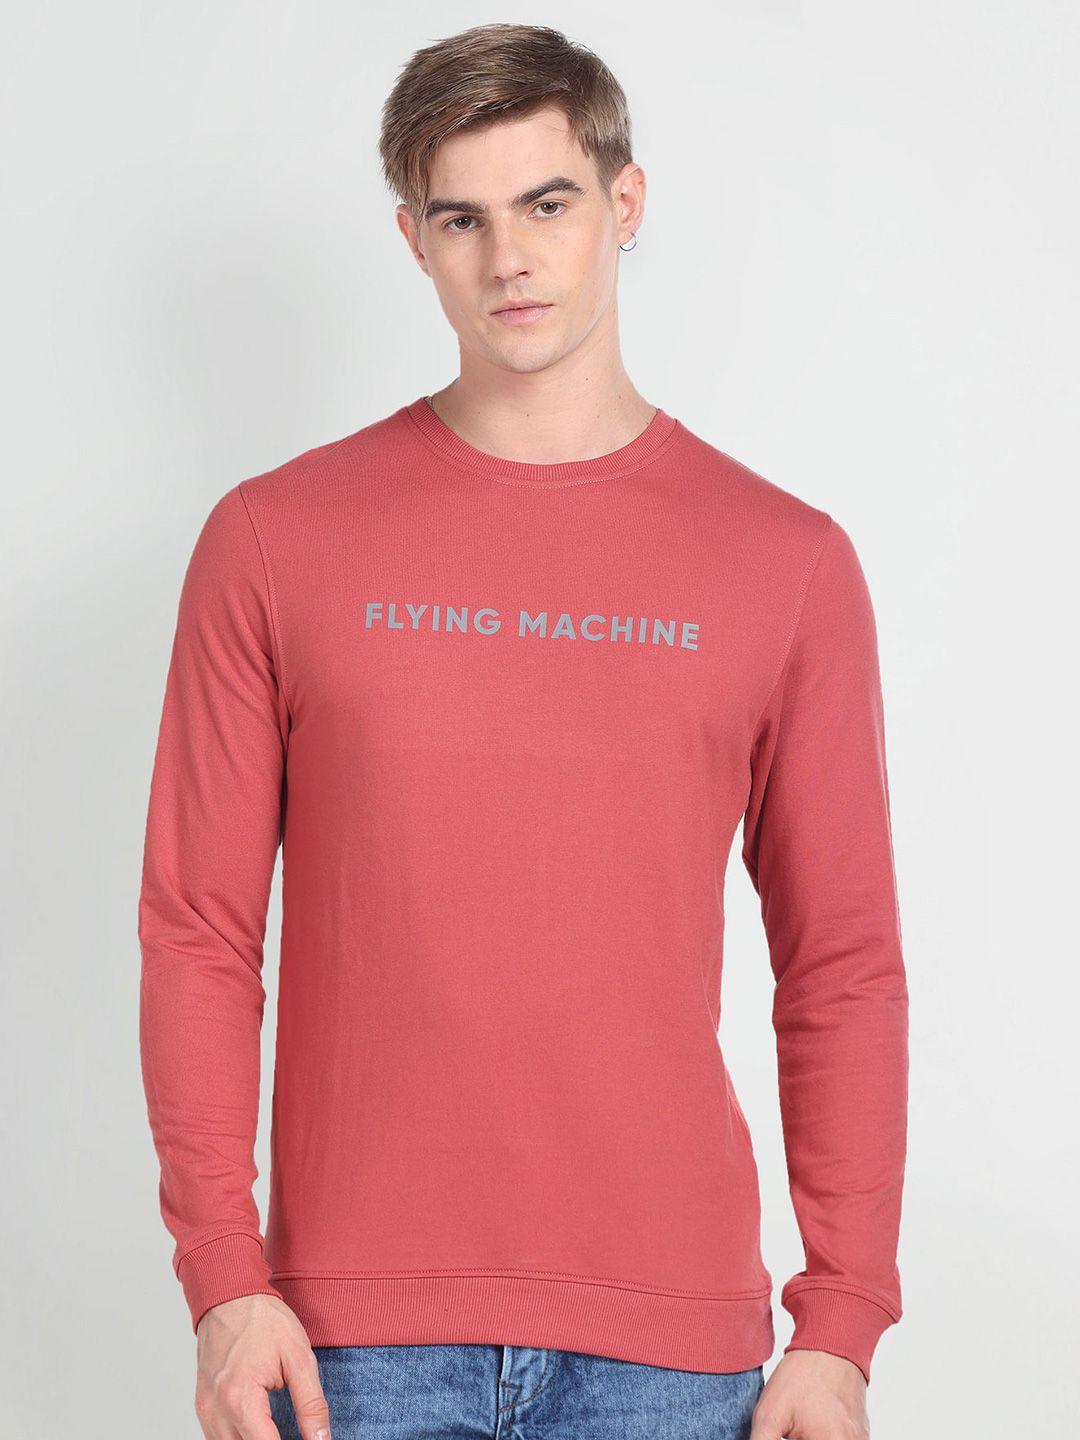 flying machine typography printed cotton sweatshirt